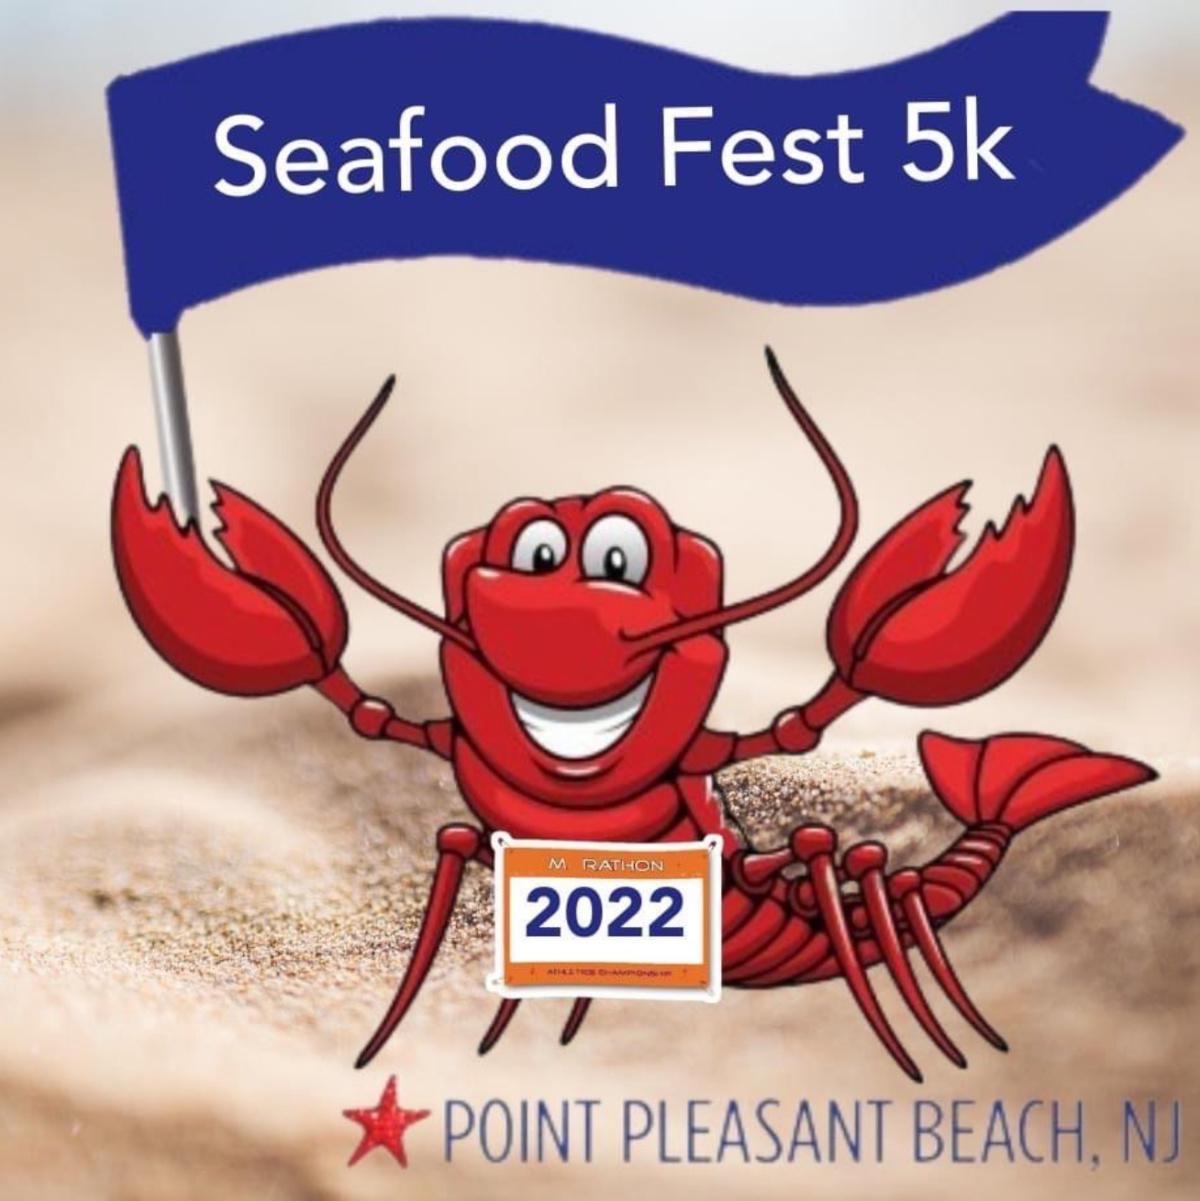 Seafood Fest 5k